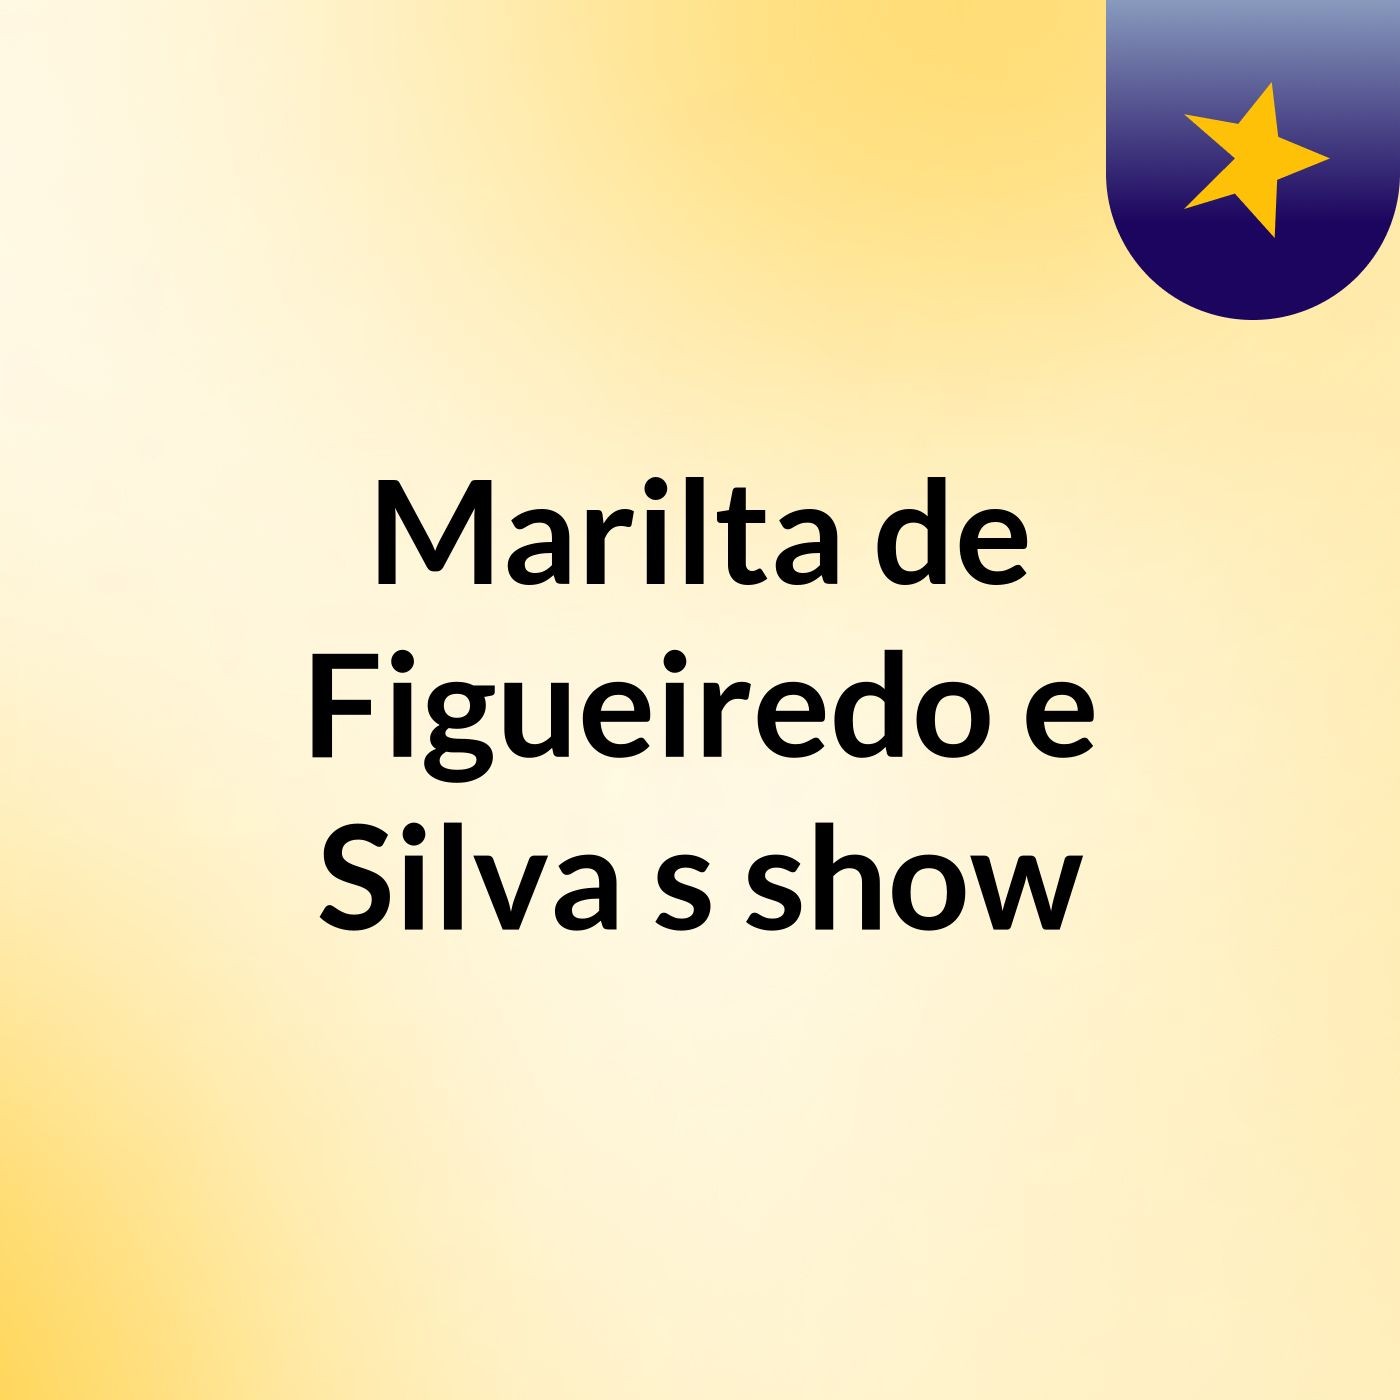 Carnaval - Marilta de Figueiredo e Silva's show